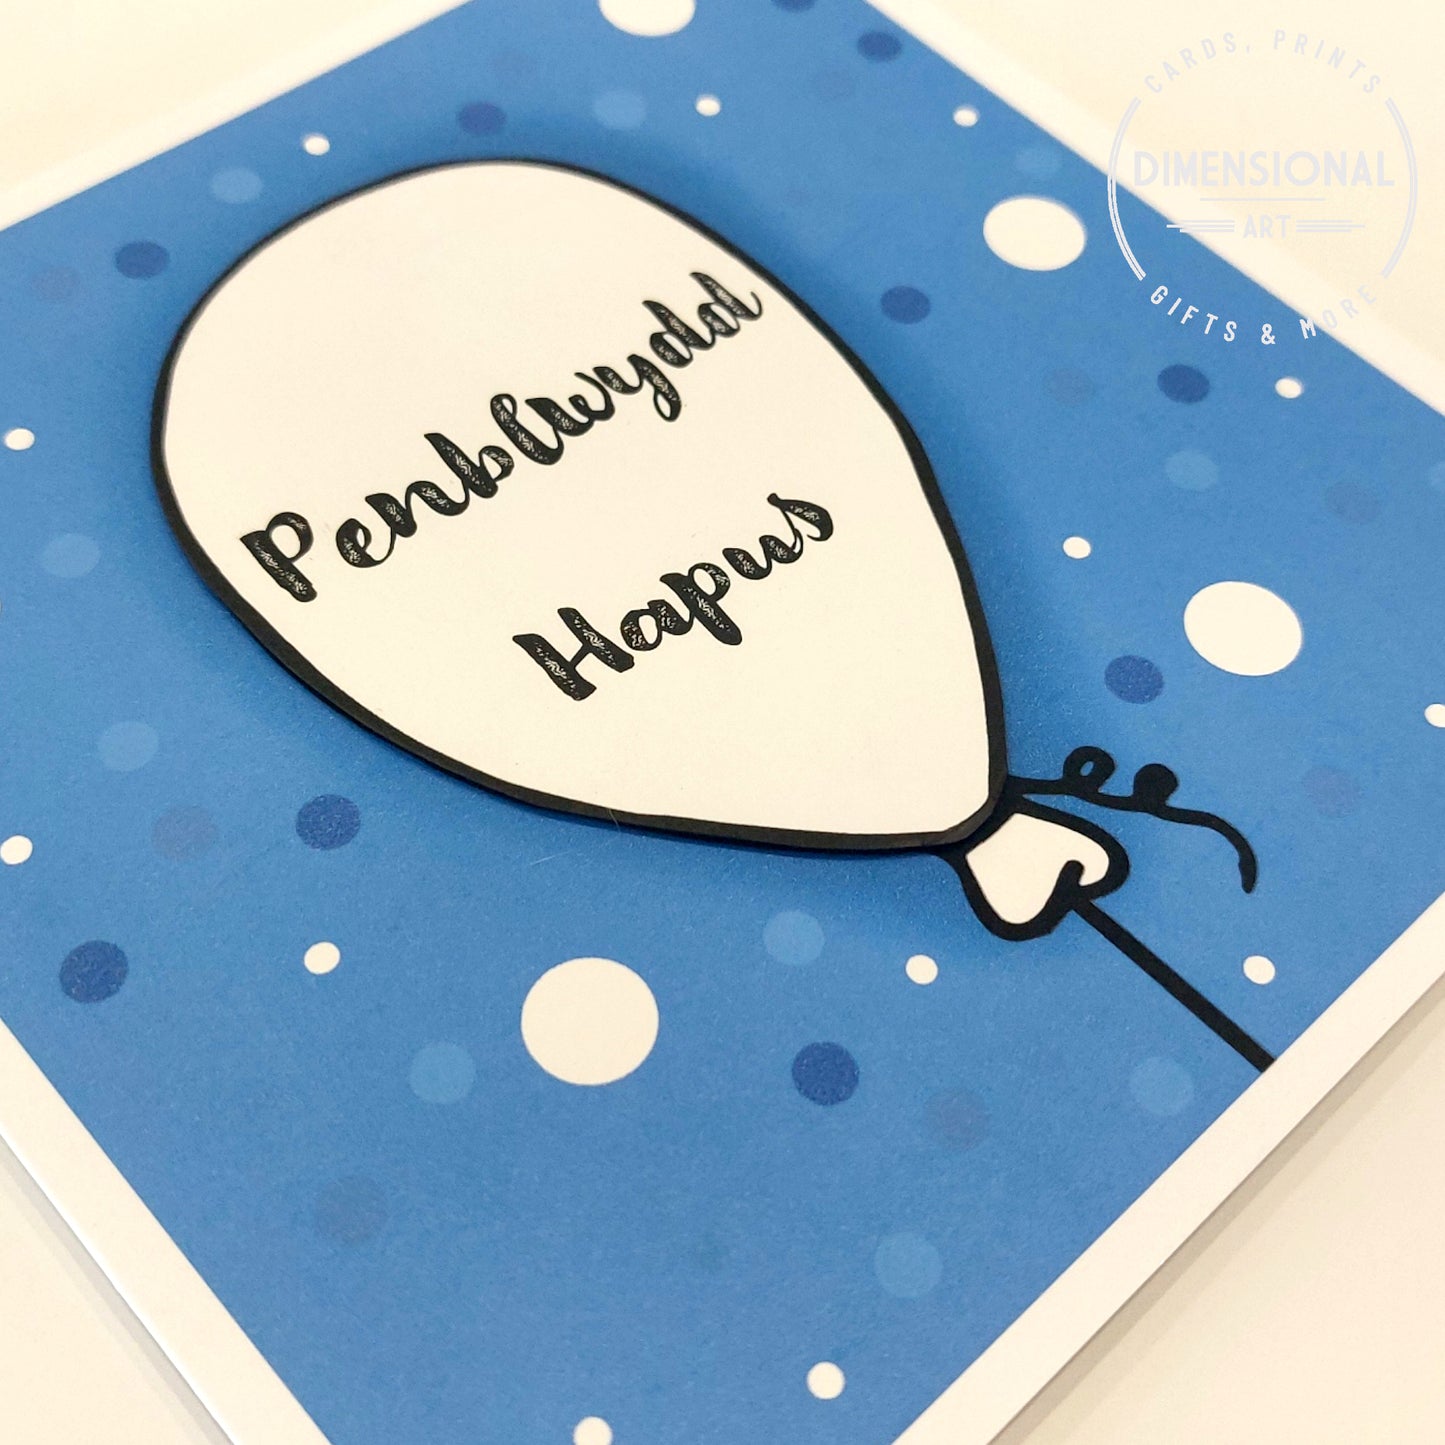 Blue Balloons Penblwydd Hapus (Birthday) Card - Welsh